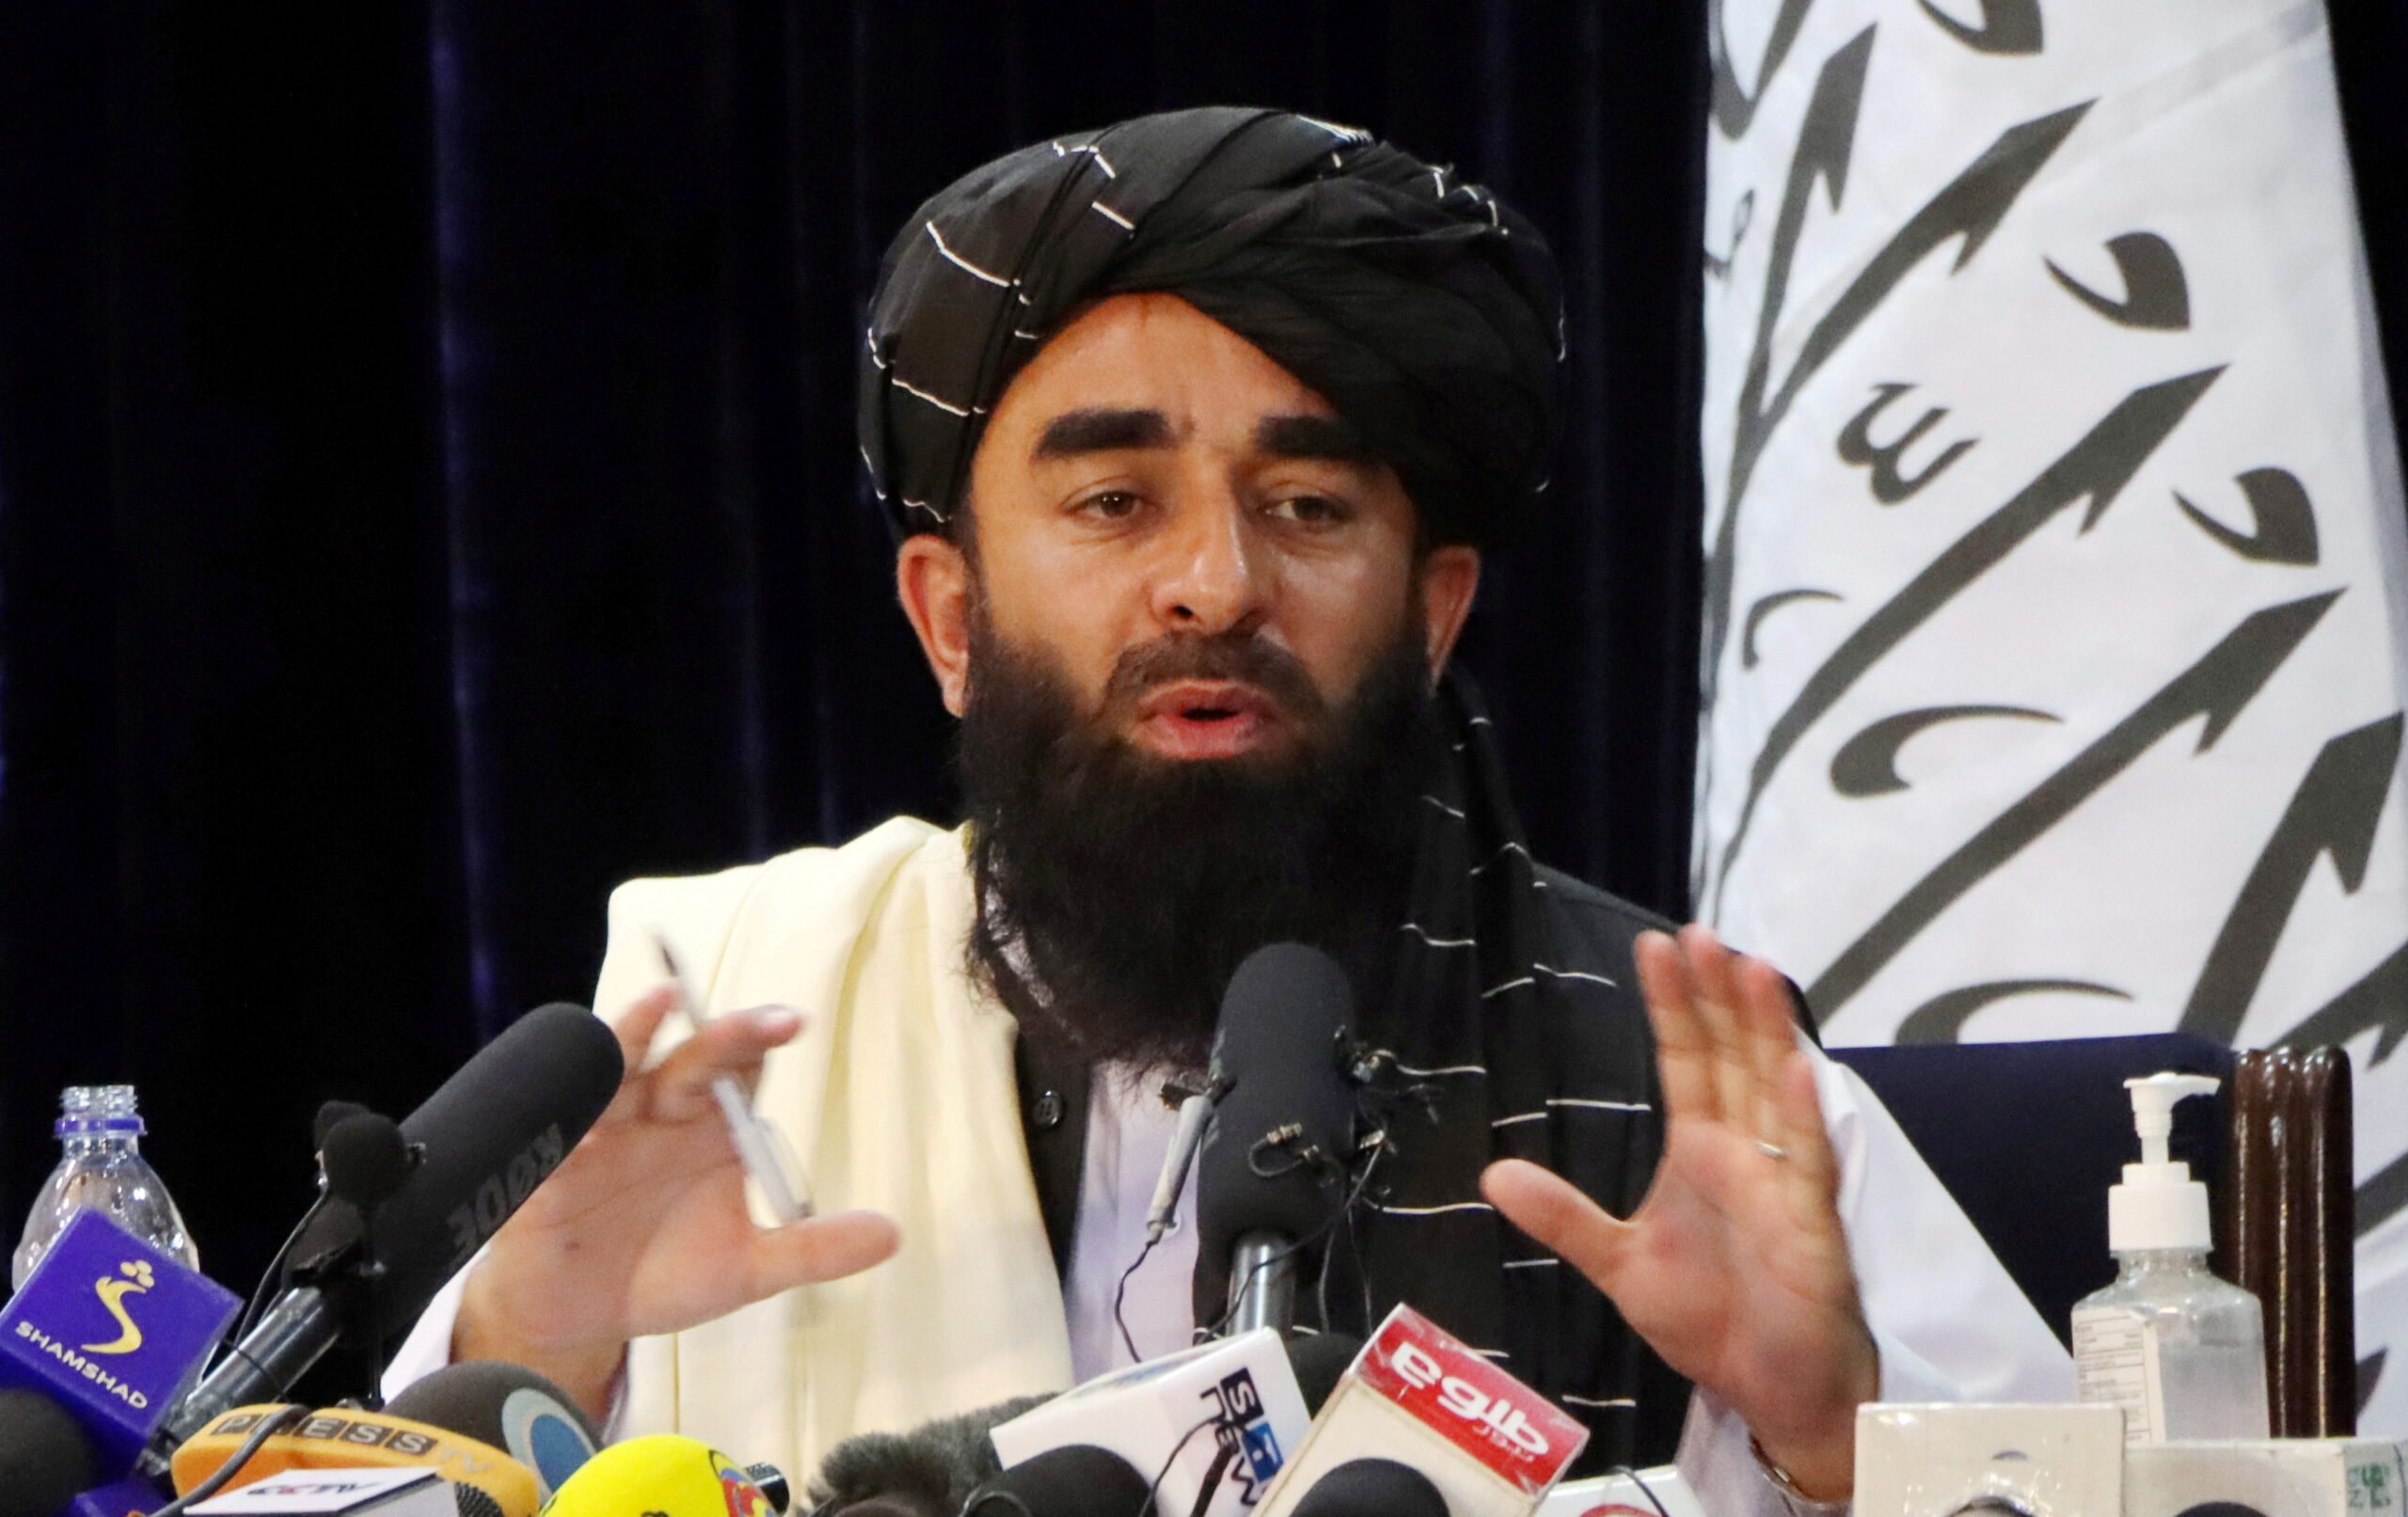 Taliban yaunda serikali ya mpito